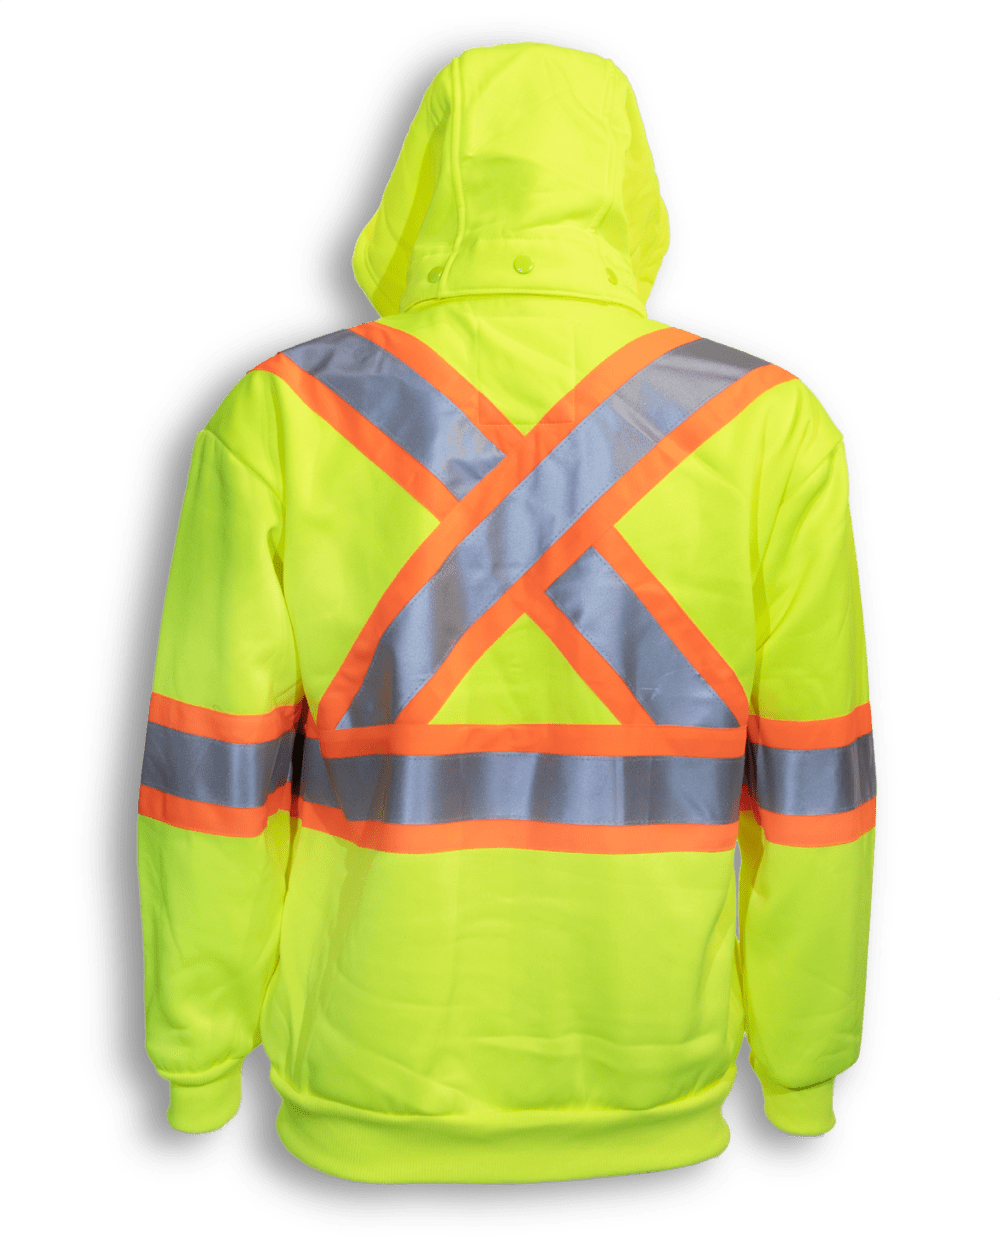 Big K Clothing 100% Polyester Full Zipper Hoodie #BK3552 Safety Yellow Back